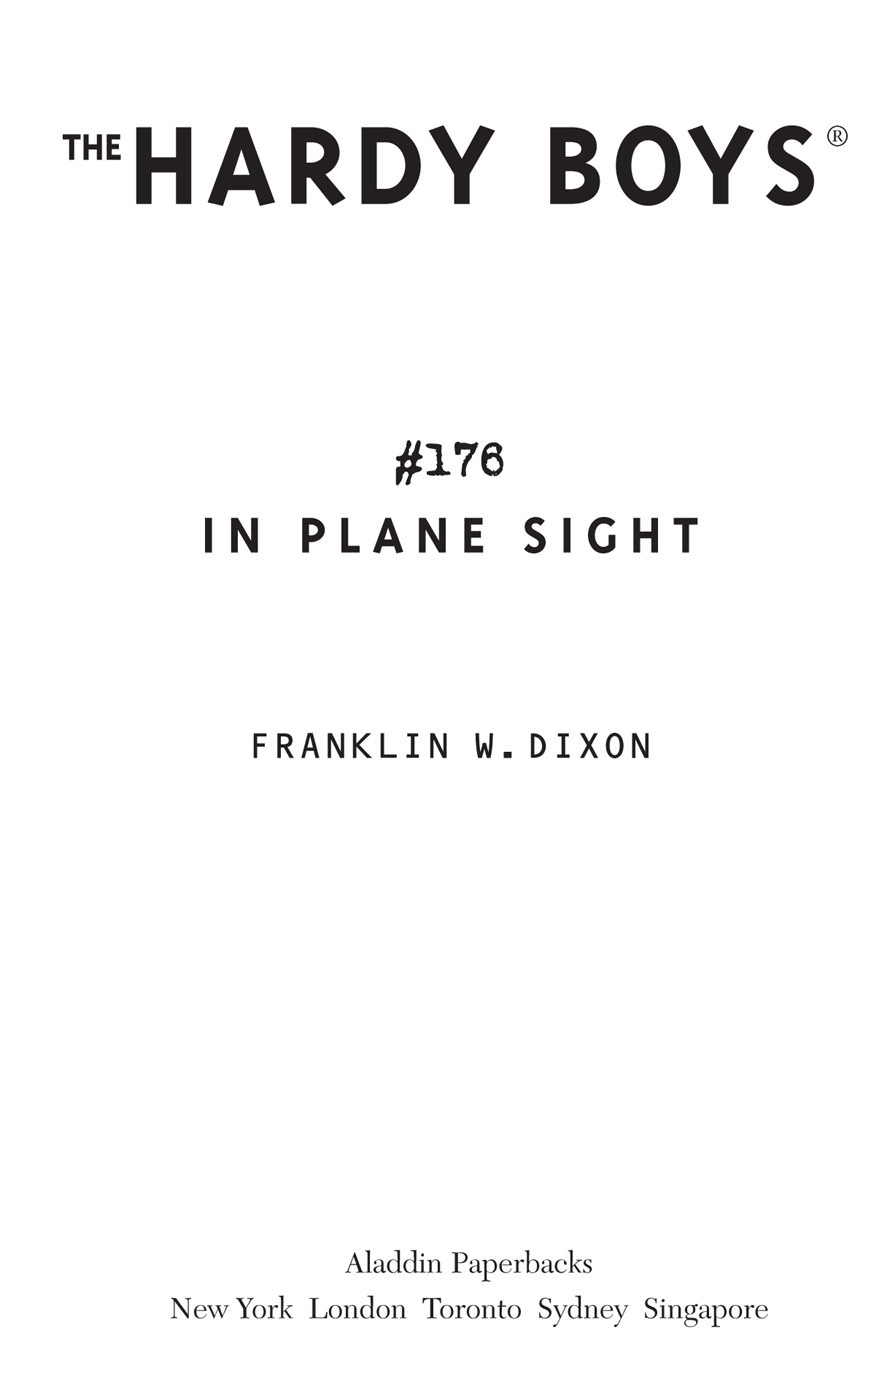 In Plane Sight by Franklin W. Dixon